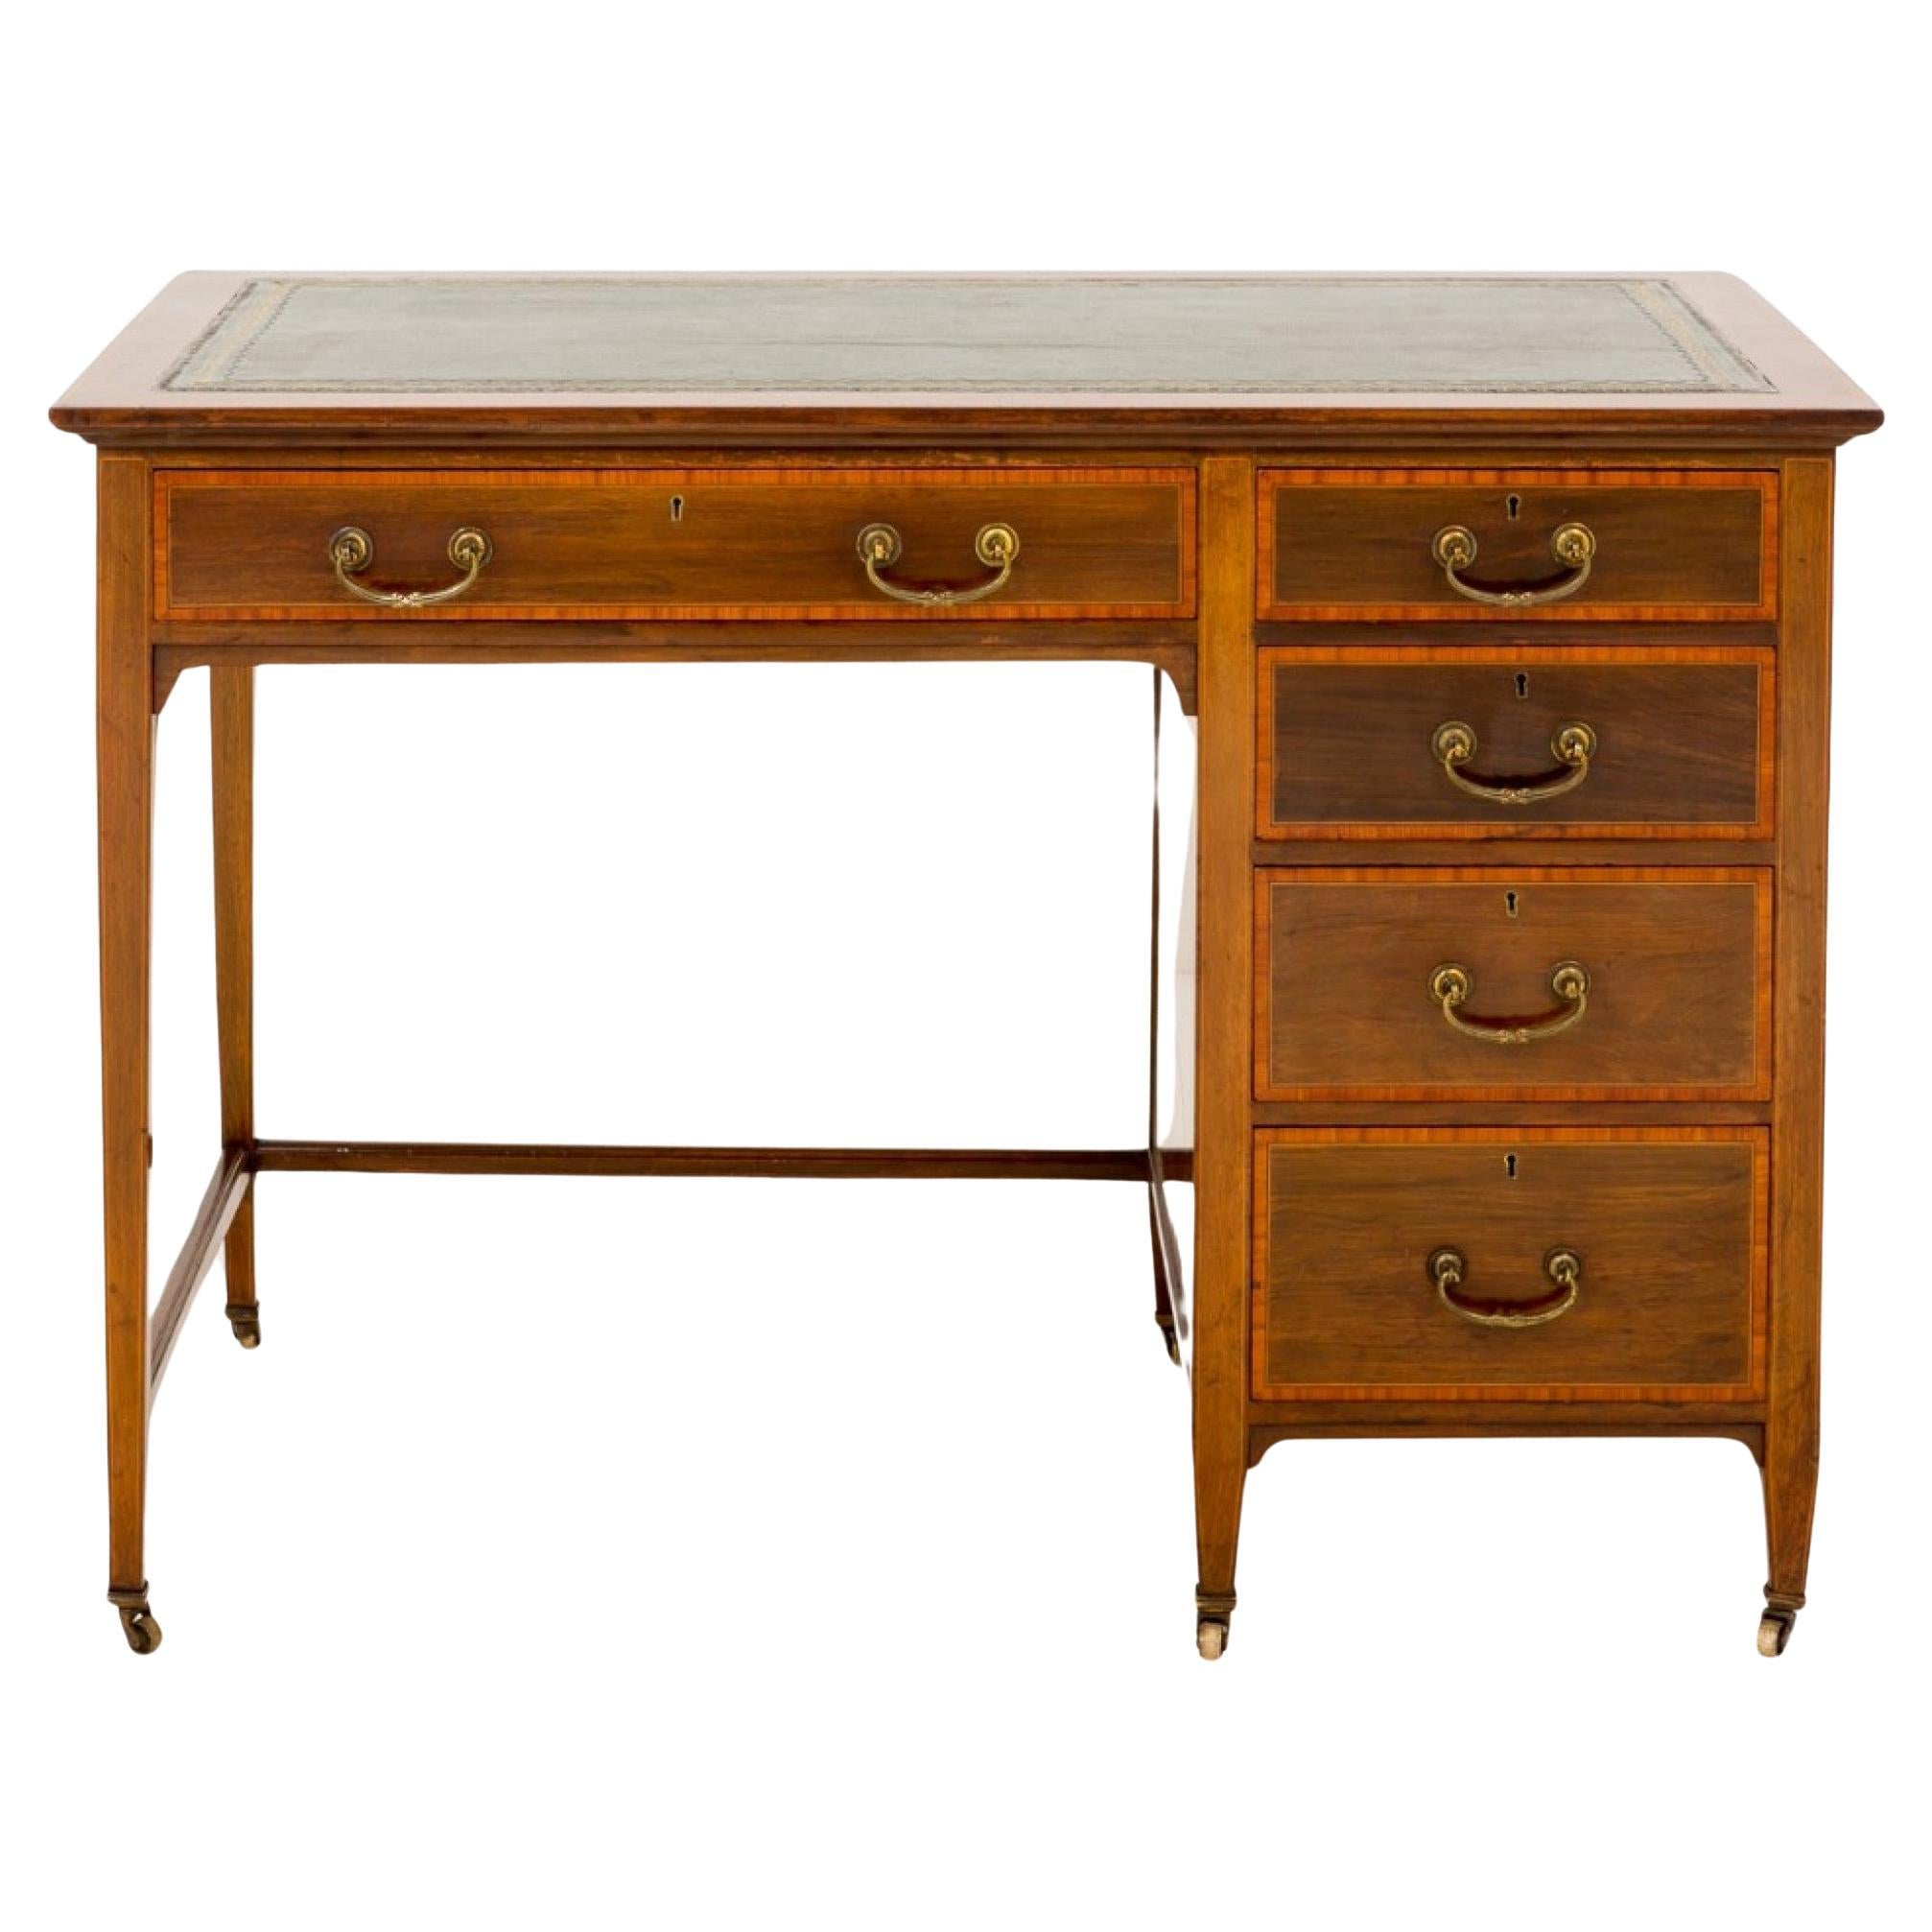 Sheraton Mahogany Desk - Antique Revival Desks Circa 1890 For Sale